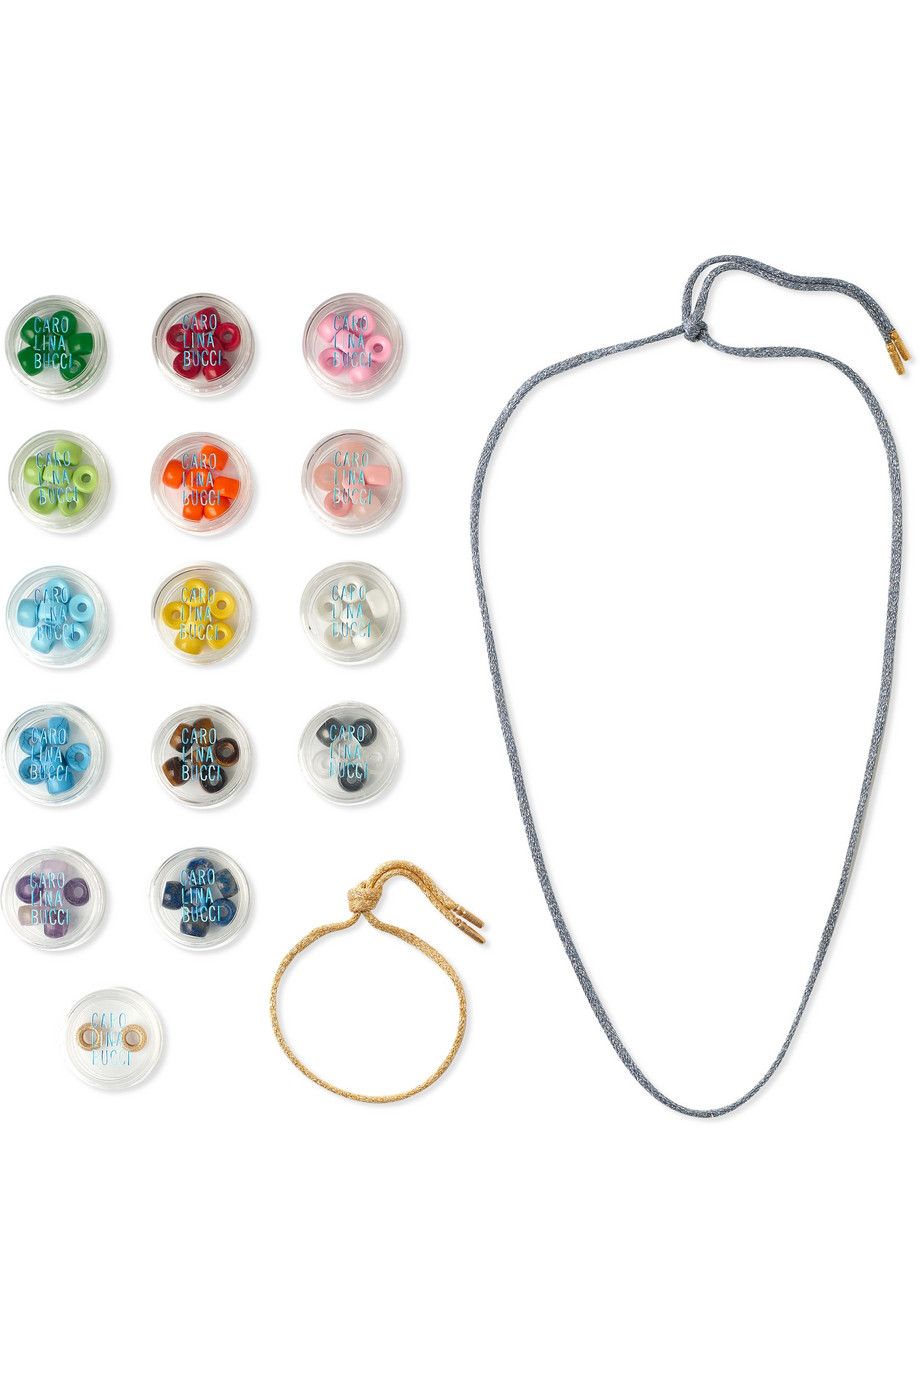 Lurex multi-stone bracelet and necklace set